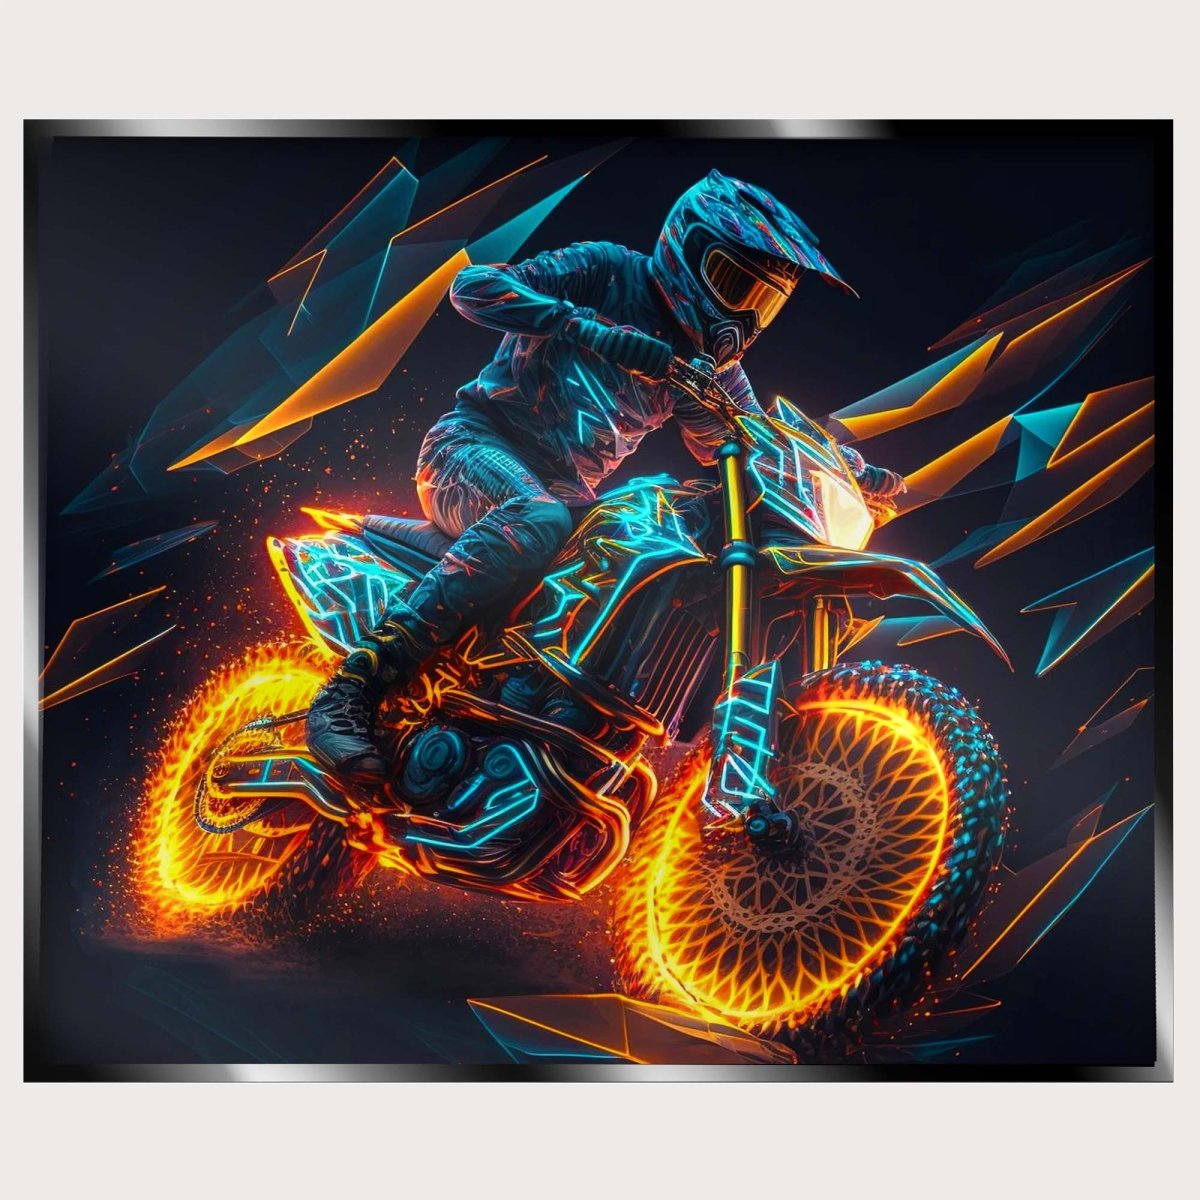 Illuminated Wall Art - Extreme Motorcycle - madaboutneon